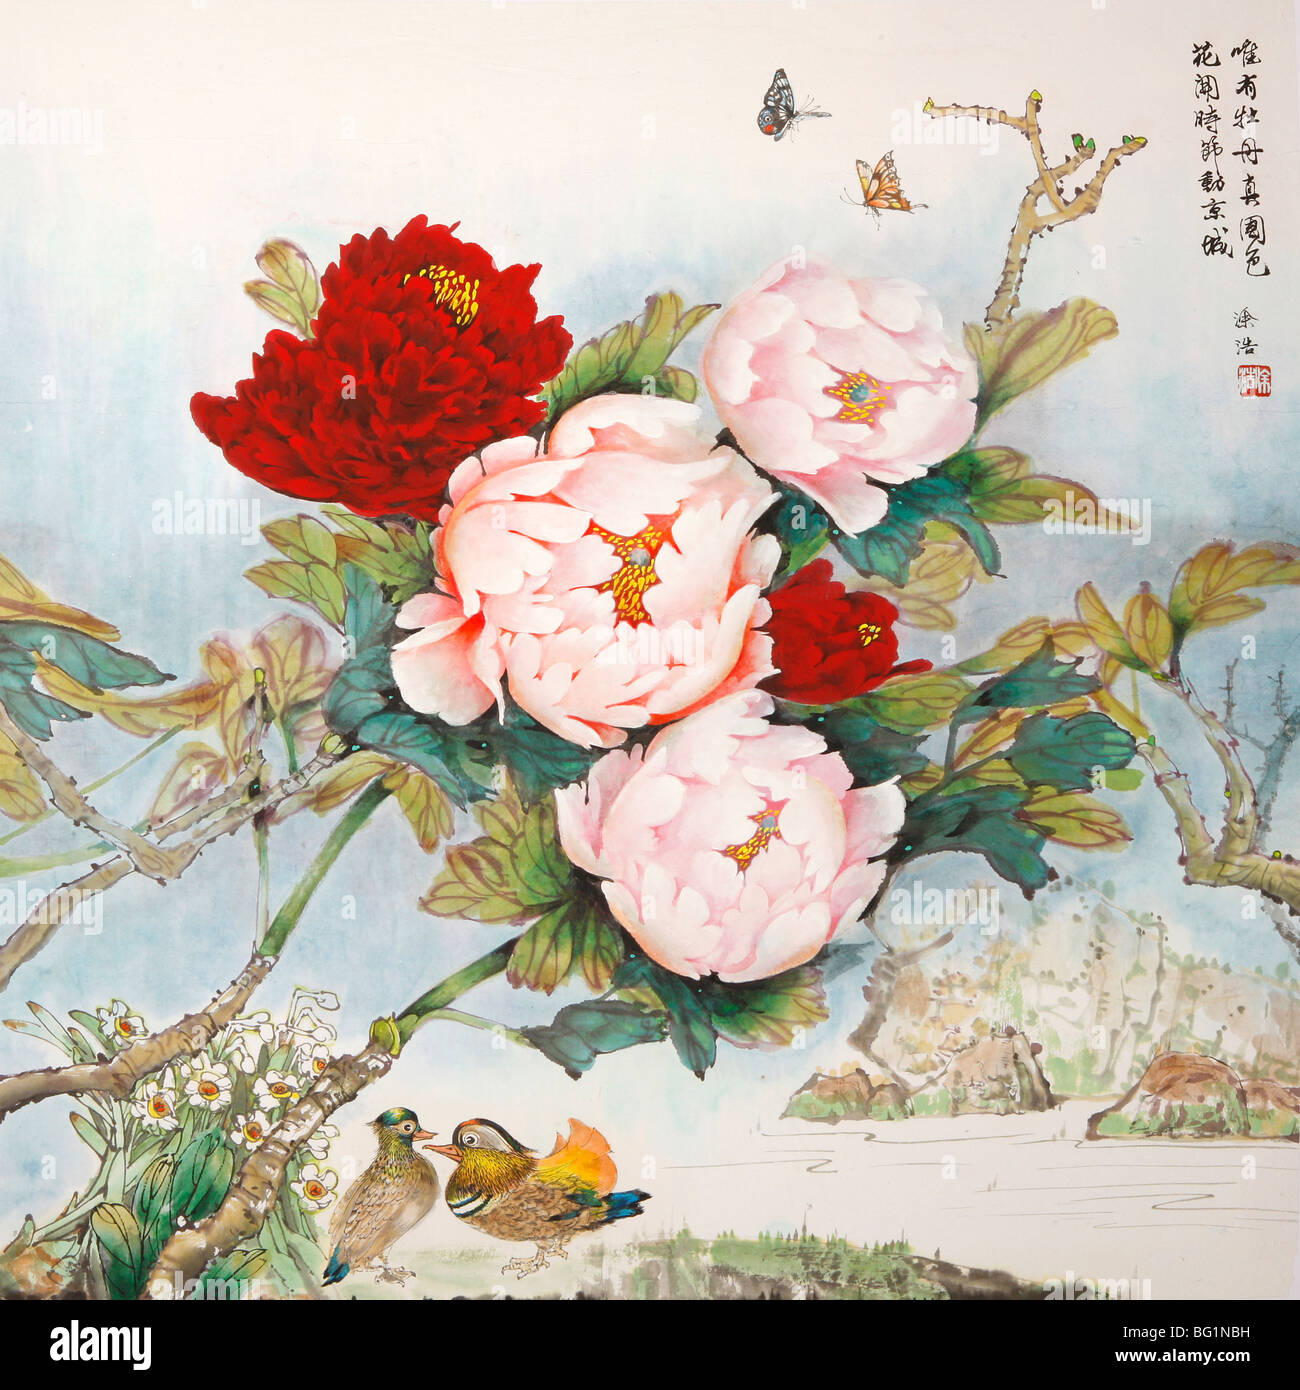 Traditionelle chinesische Malerei Stockfotografie - Alamy